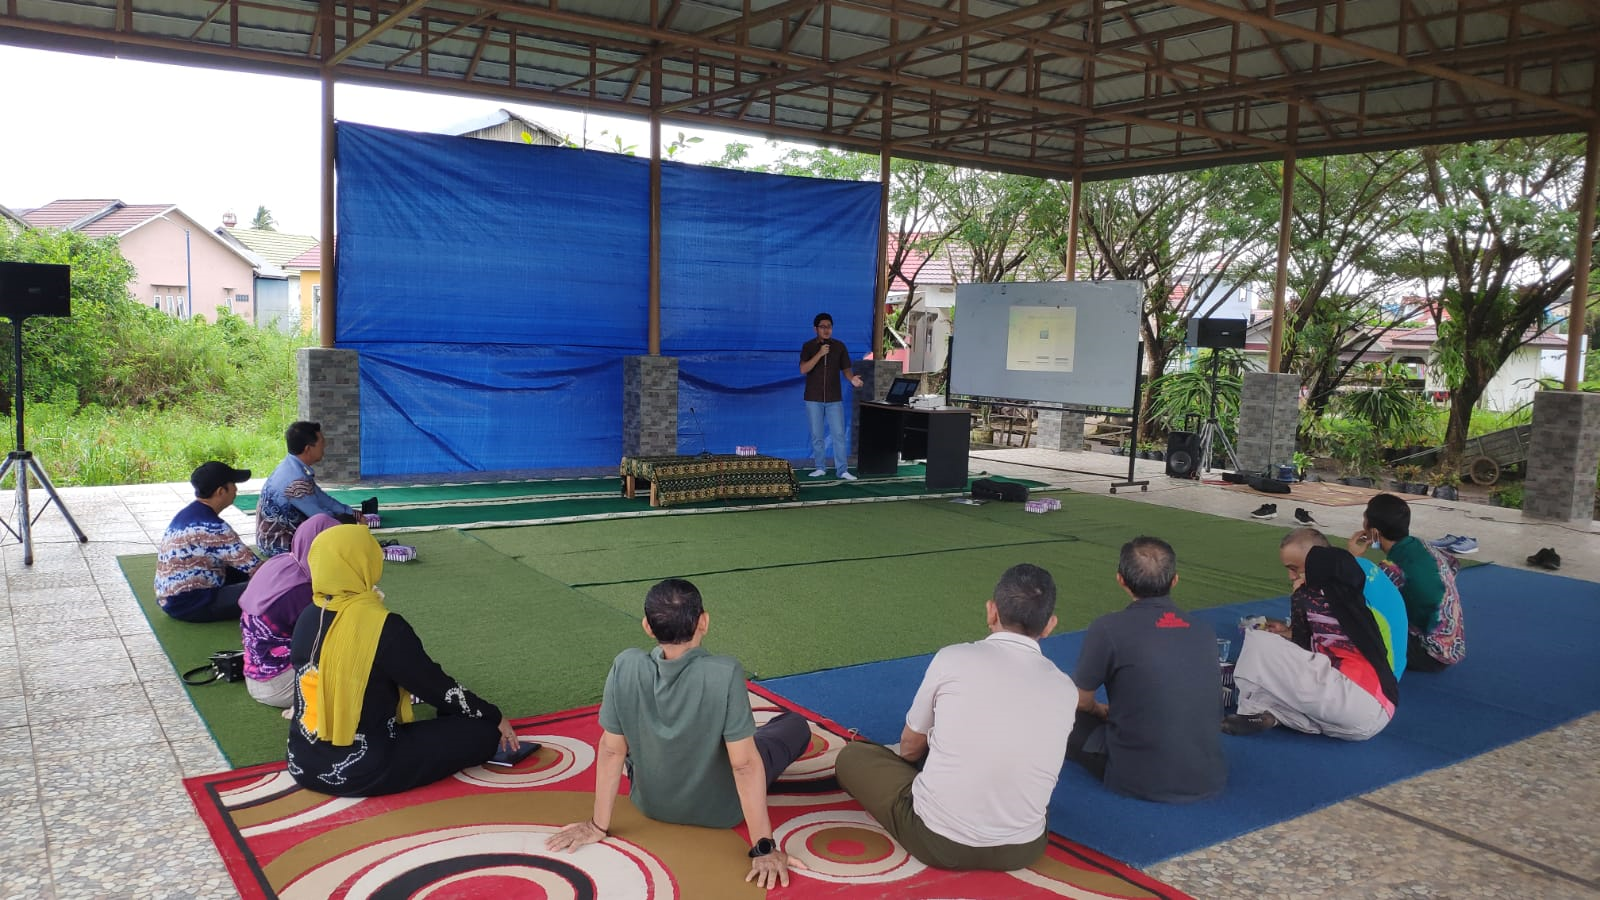 The PT Daun Pintar Raya team is providing technical education to local farmers in Nusantara.